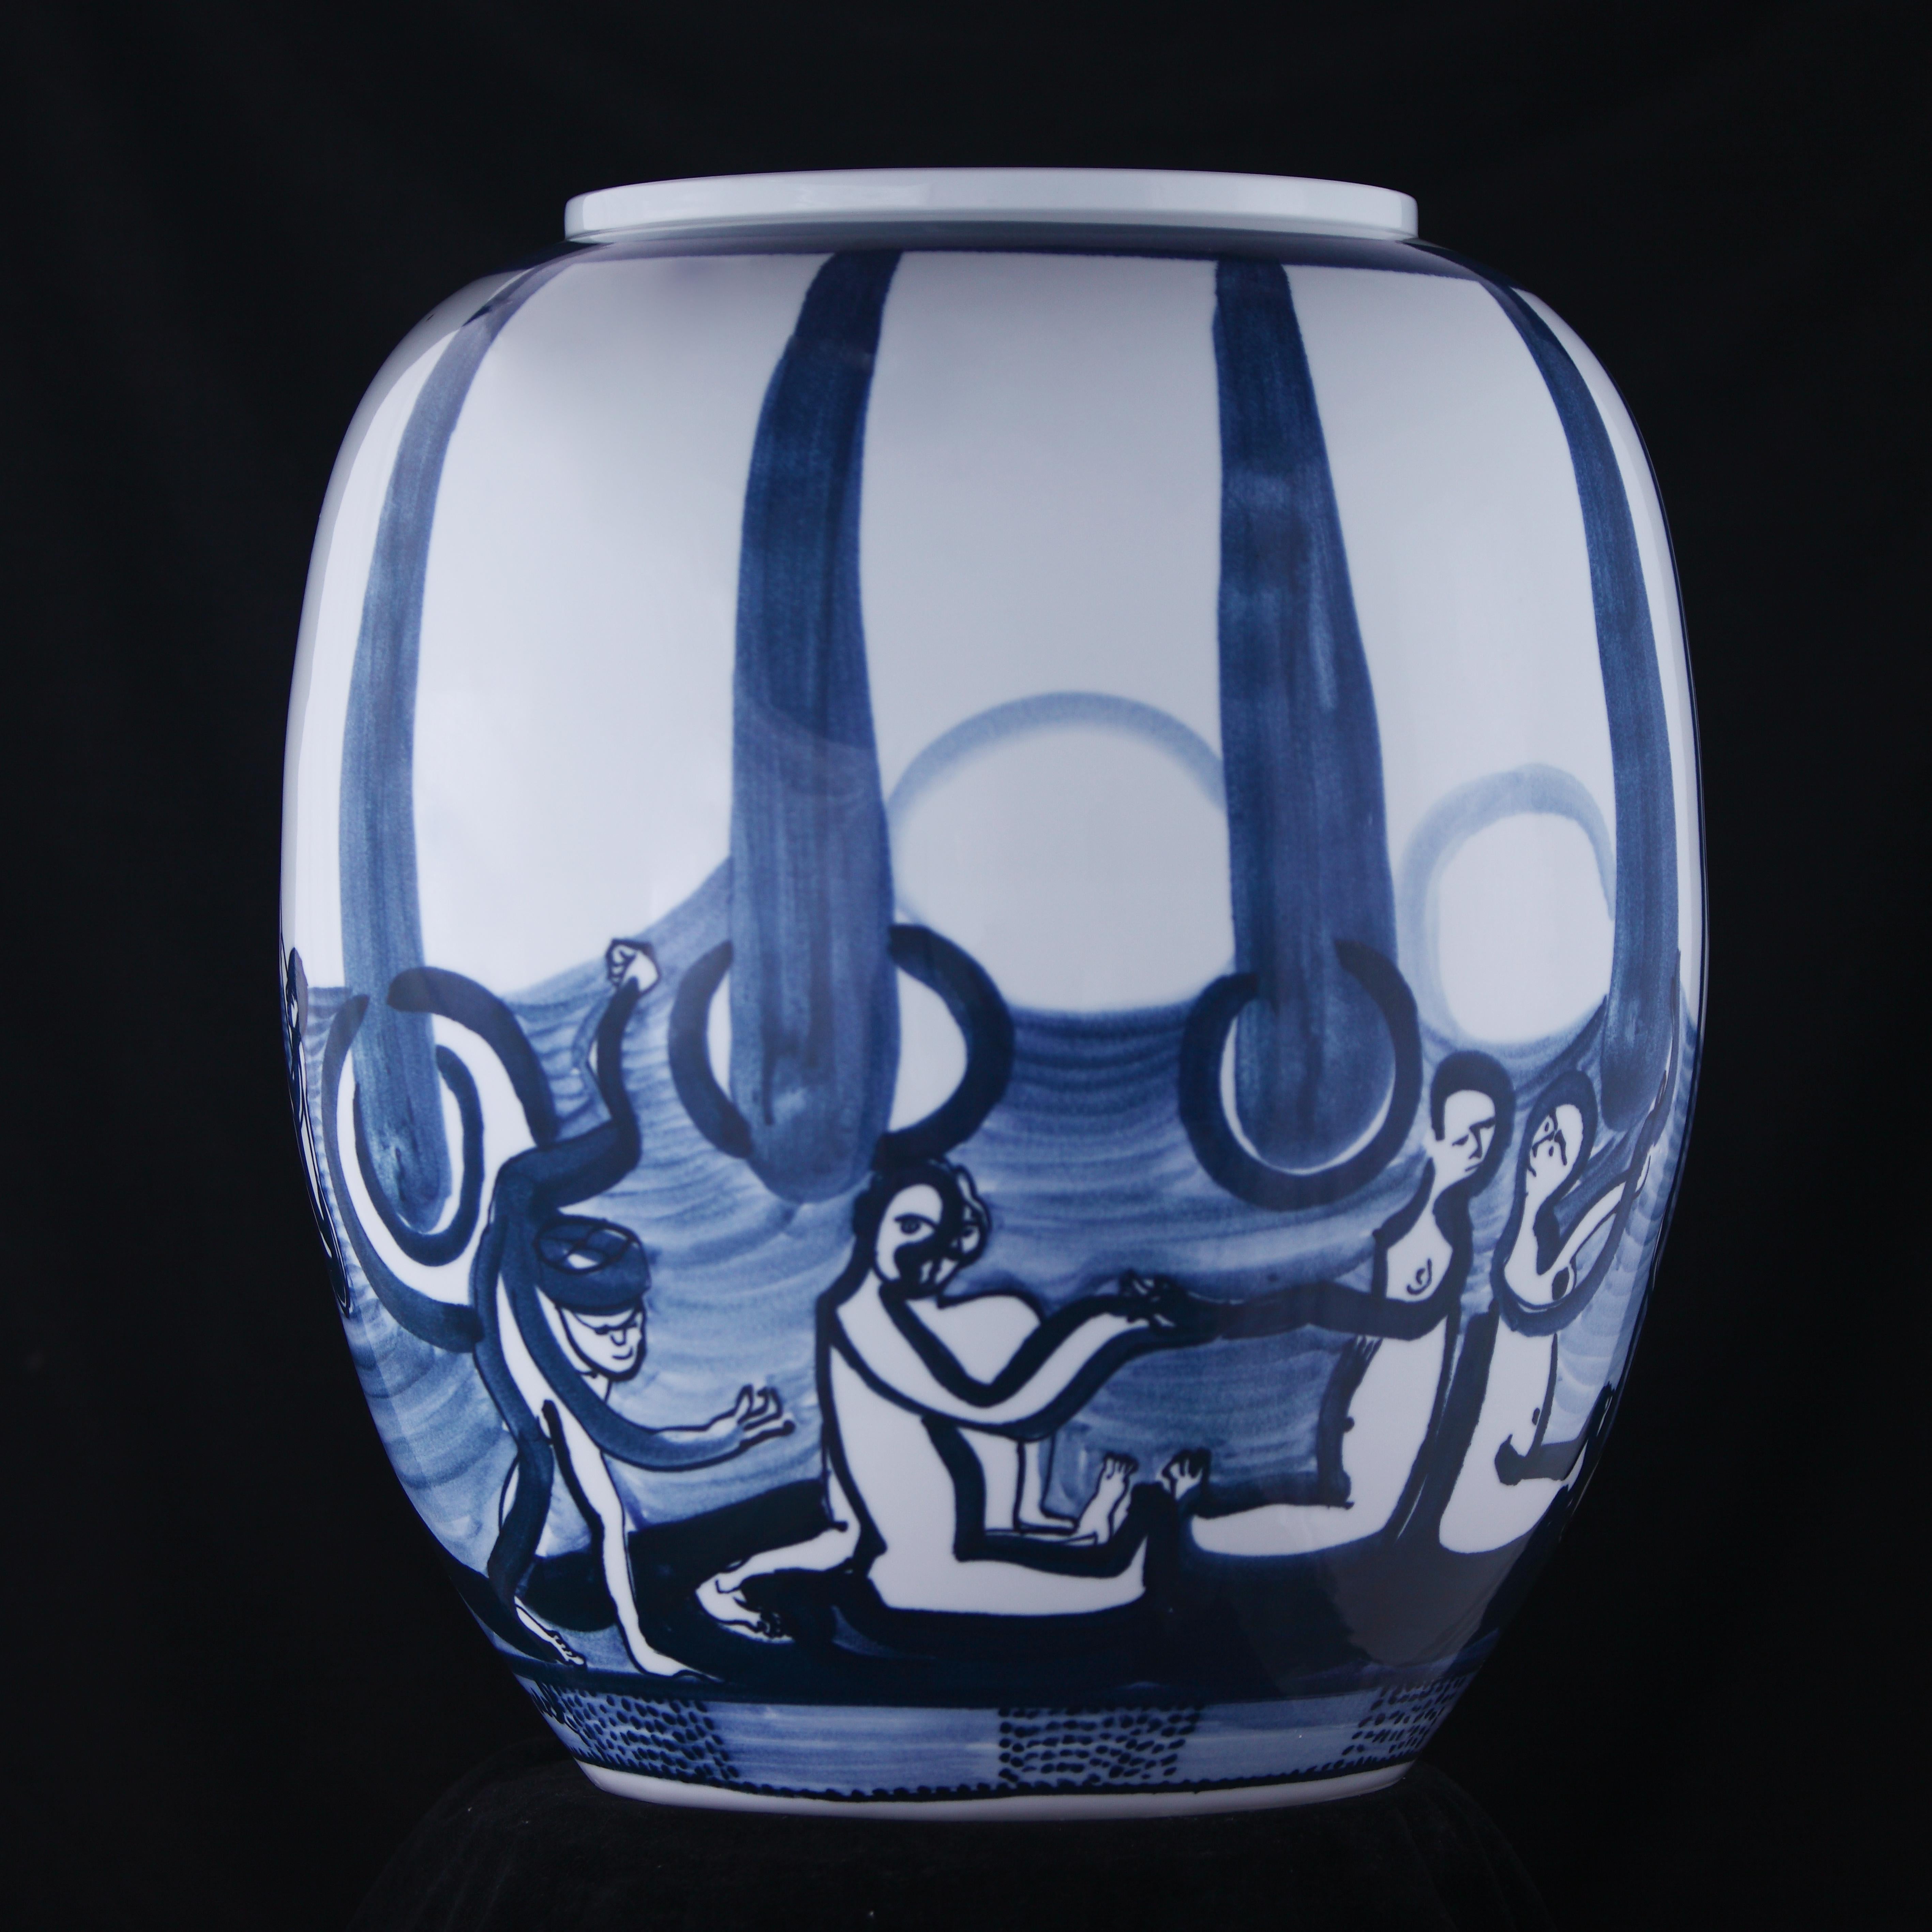 Signature style original ceramic artwork by renowned ceramicist, Jared FitzGerald. 